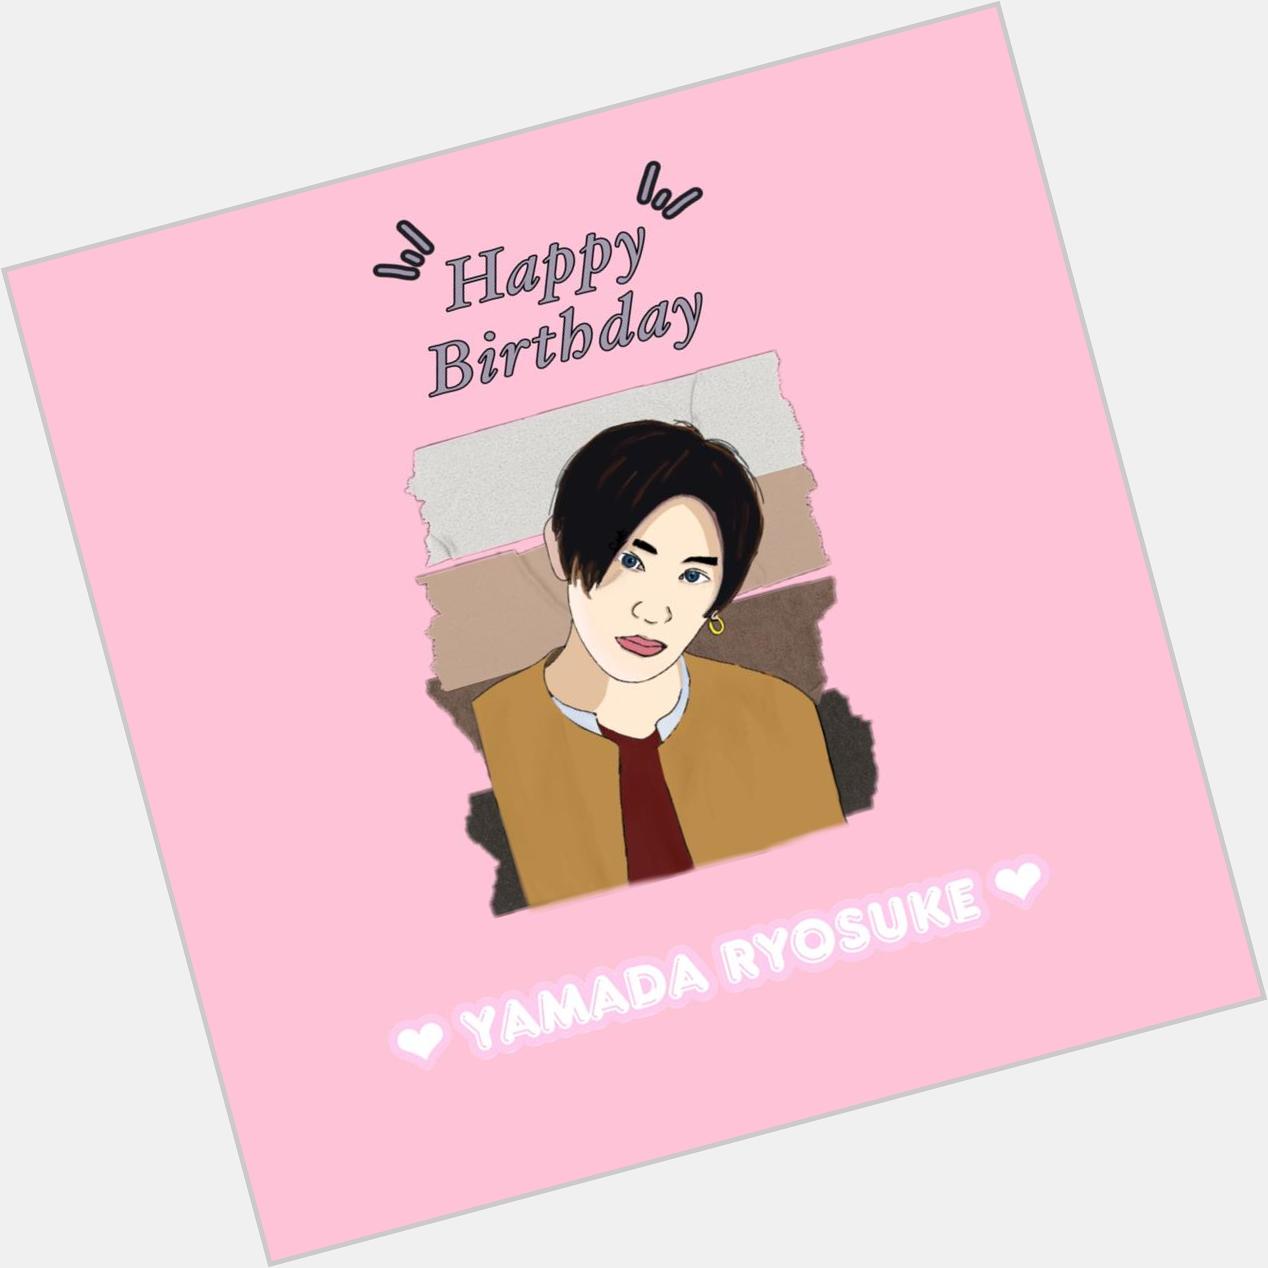              !! Happy 27th Birthday Yamada Ryosuke Wish You all the Best  